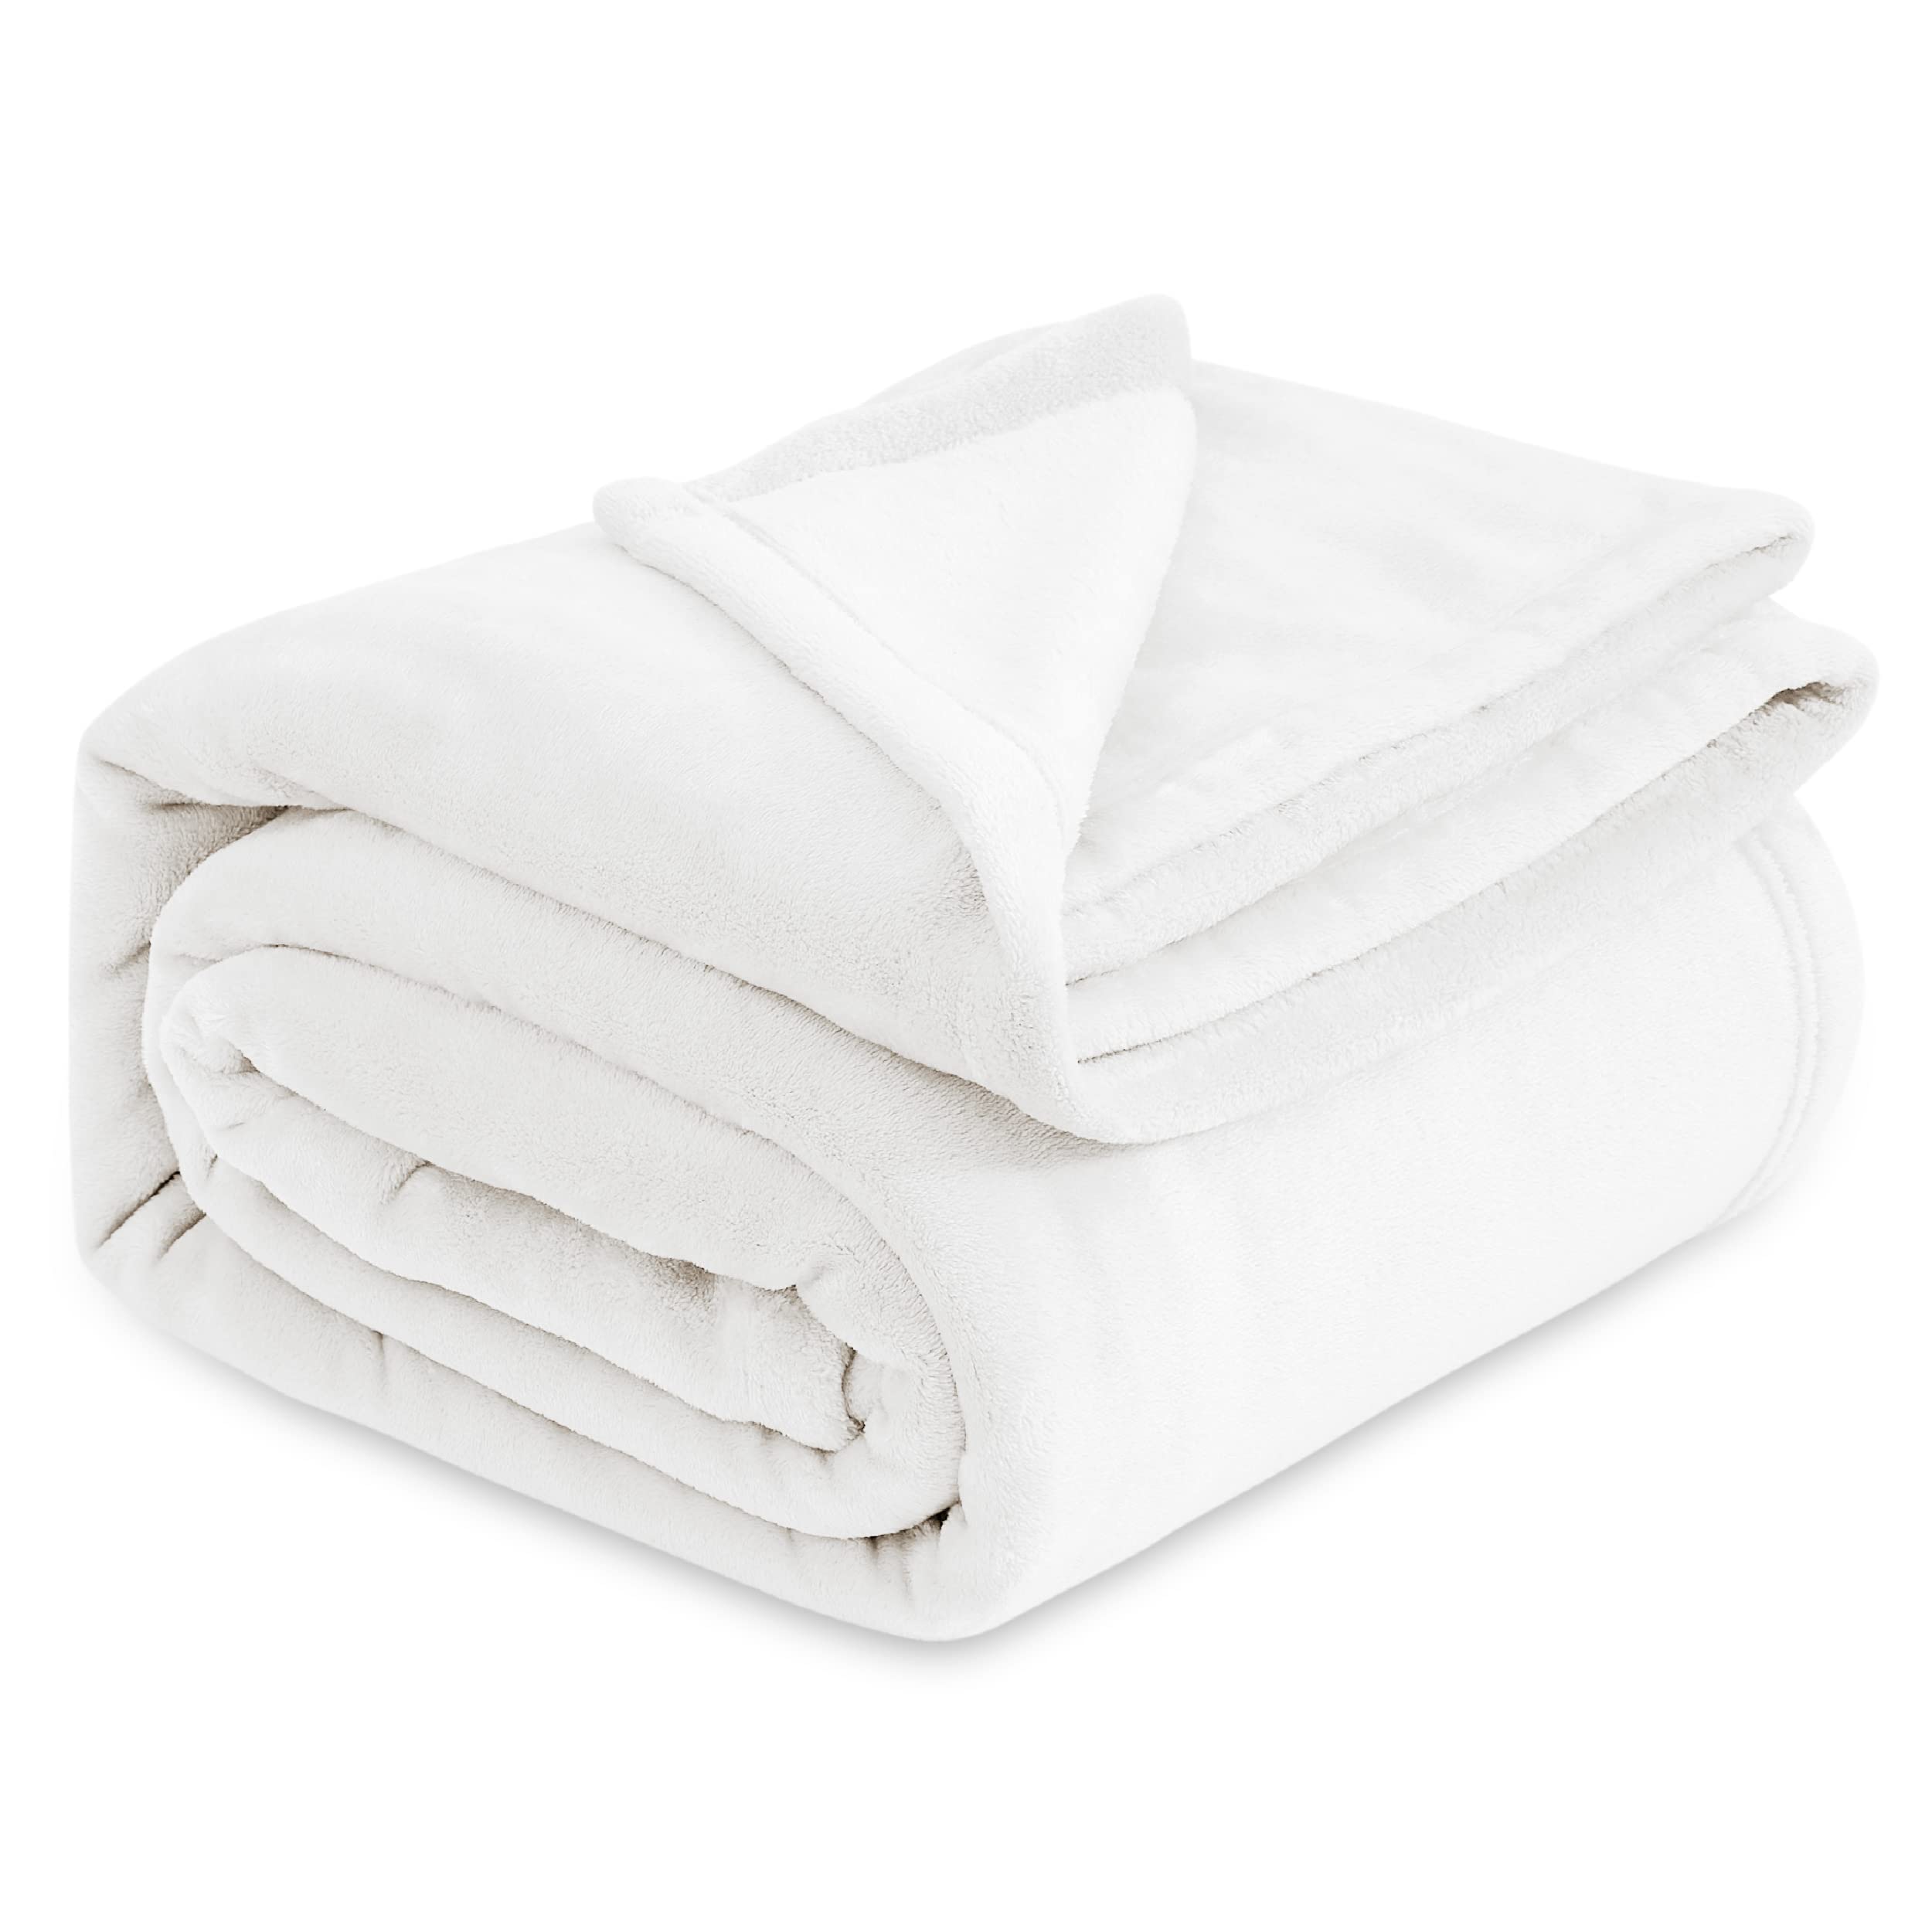 Book Cover Bedsure Fleece Blanket Queen Blanket White - Bed Blanket Soft Lightweight Plush Fuzzy Cozy Luxury Microfiber, 90x90 inches Queen (90